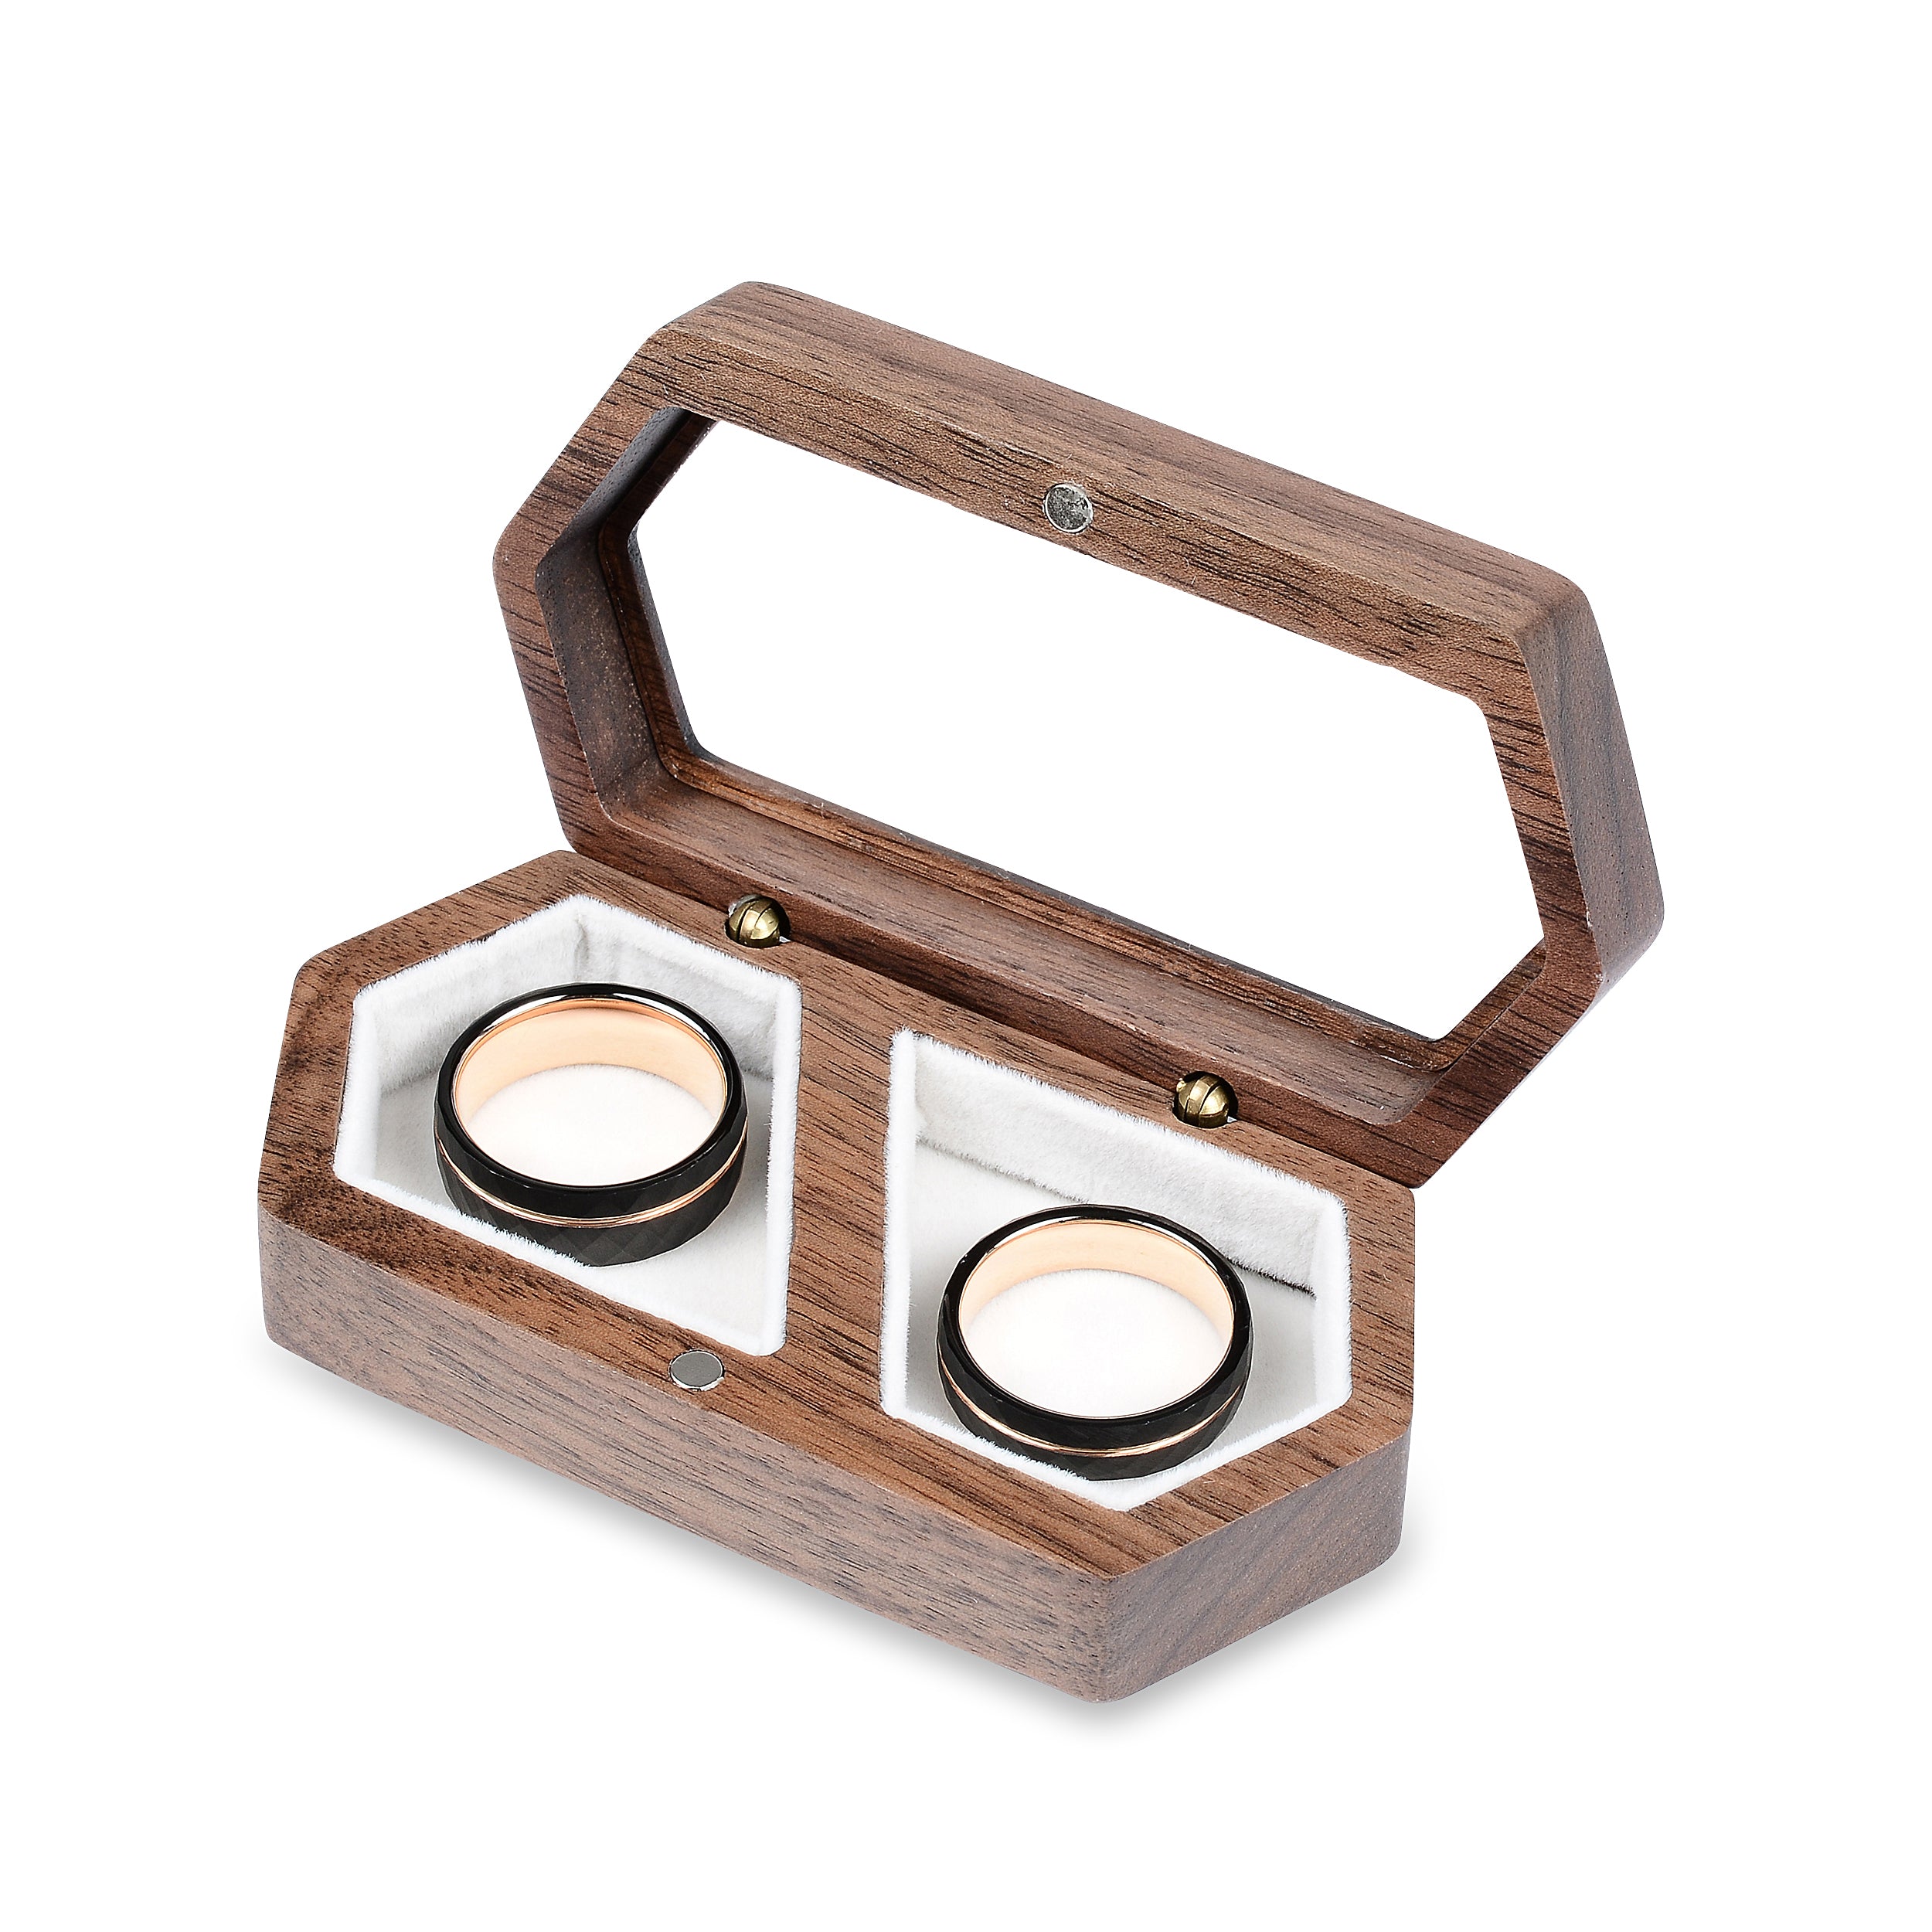 White Wedding Ring Case - Premium Real Wood Velvet Cushion Ring Box With Magnetic Lid